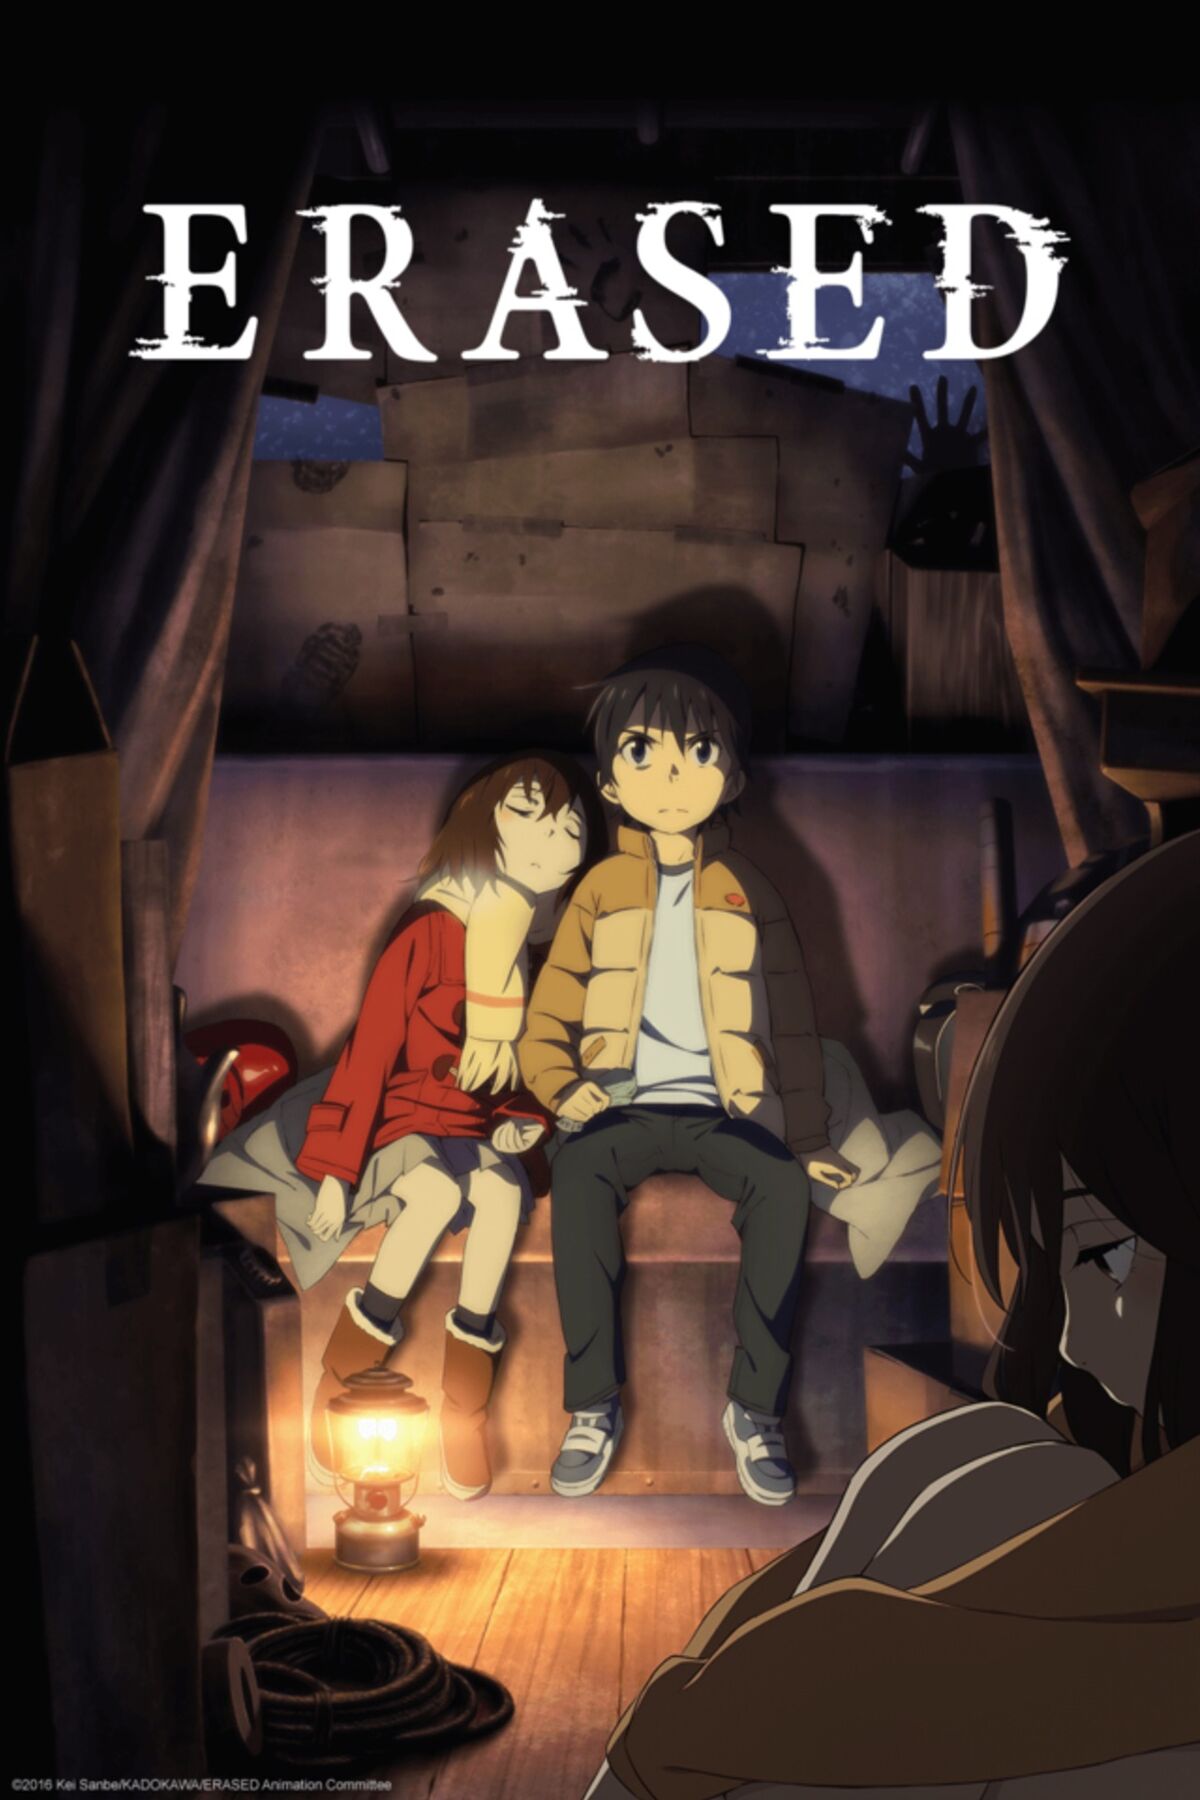 Kei Sanbe, autor de Erased, lançará novo mangá em março - NerdBunker